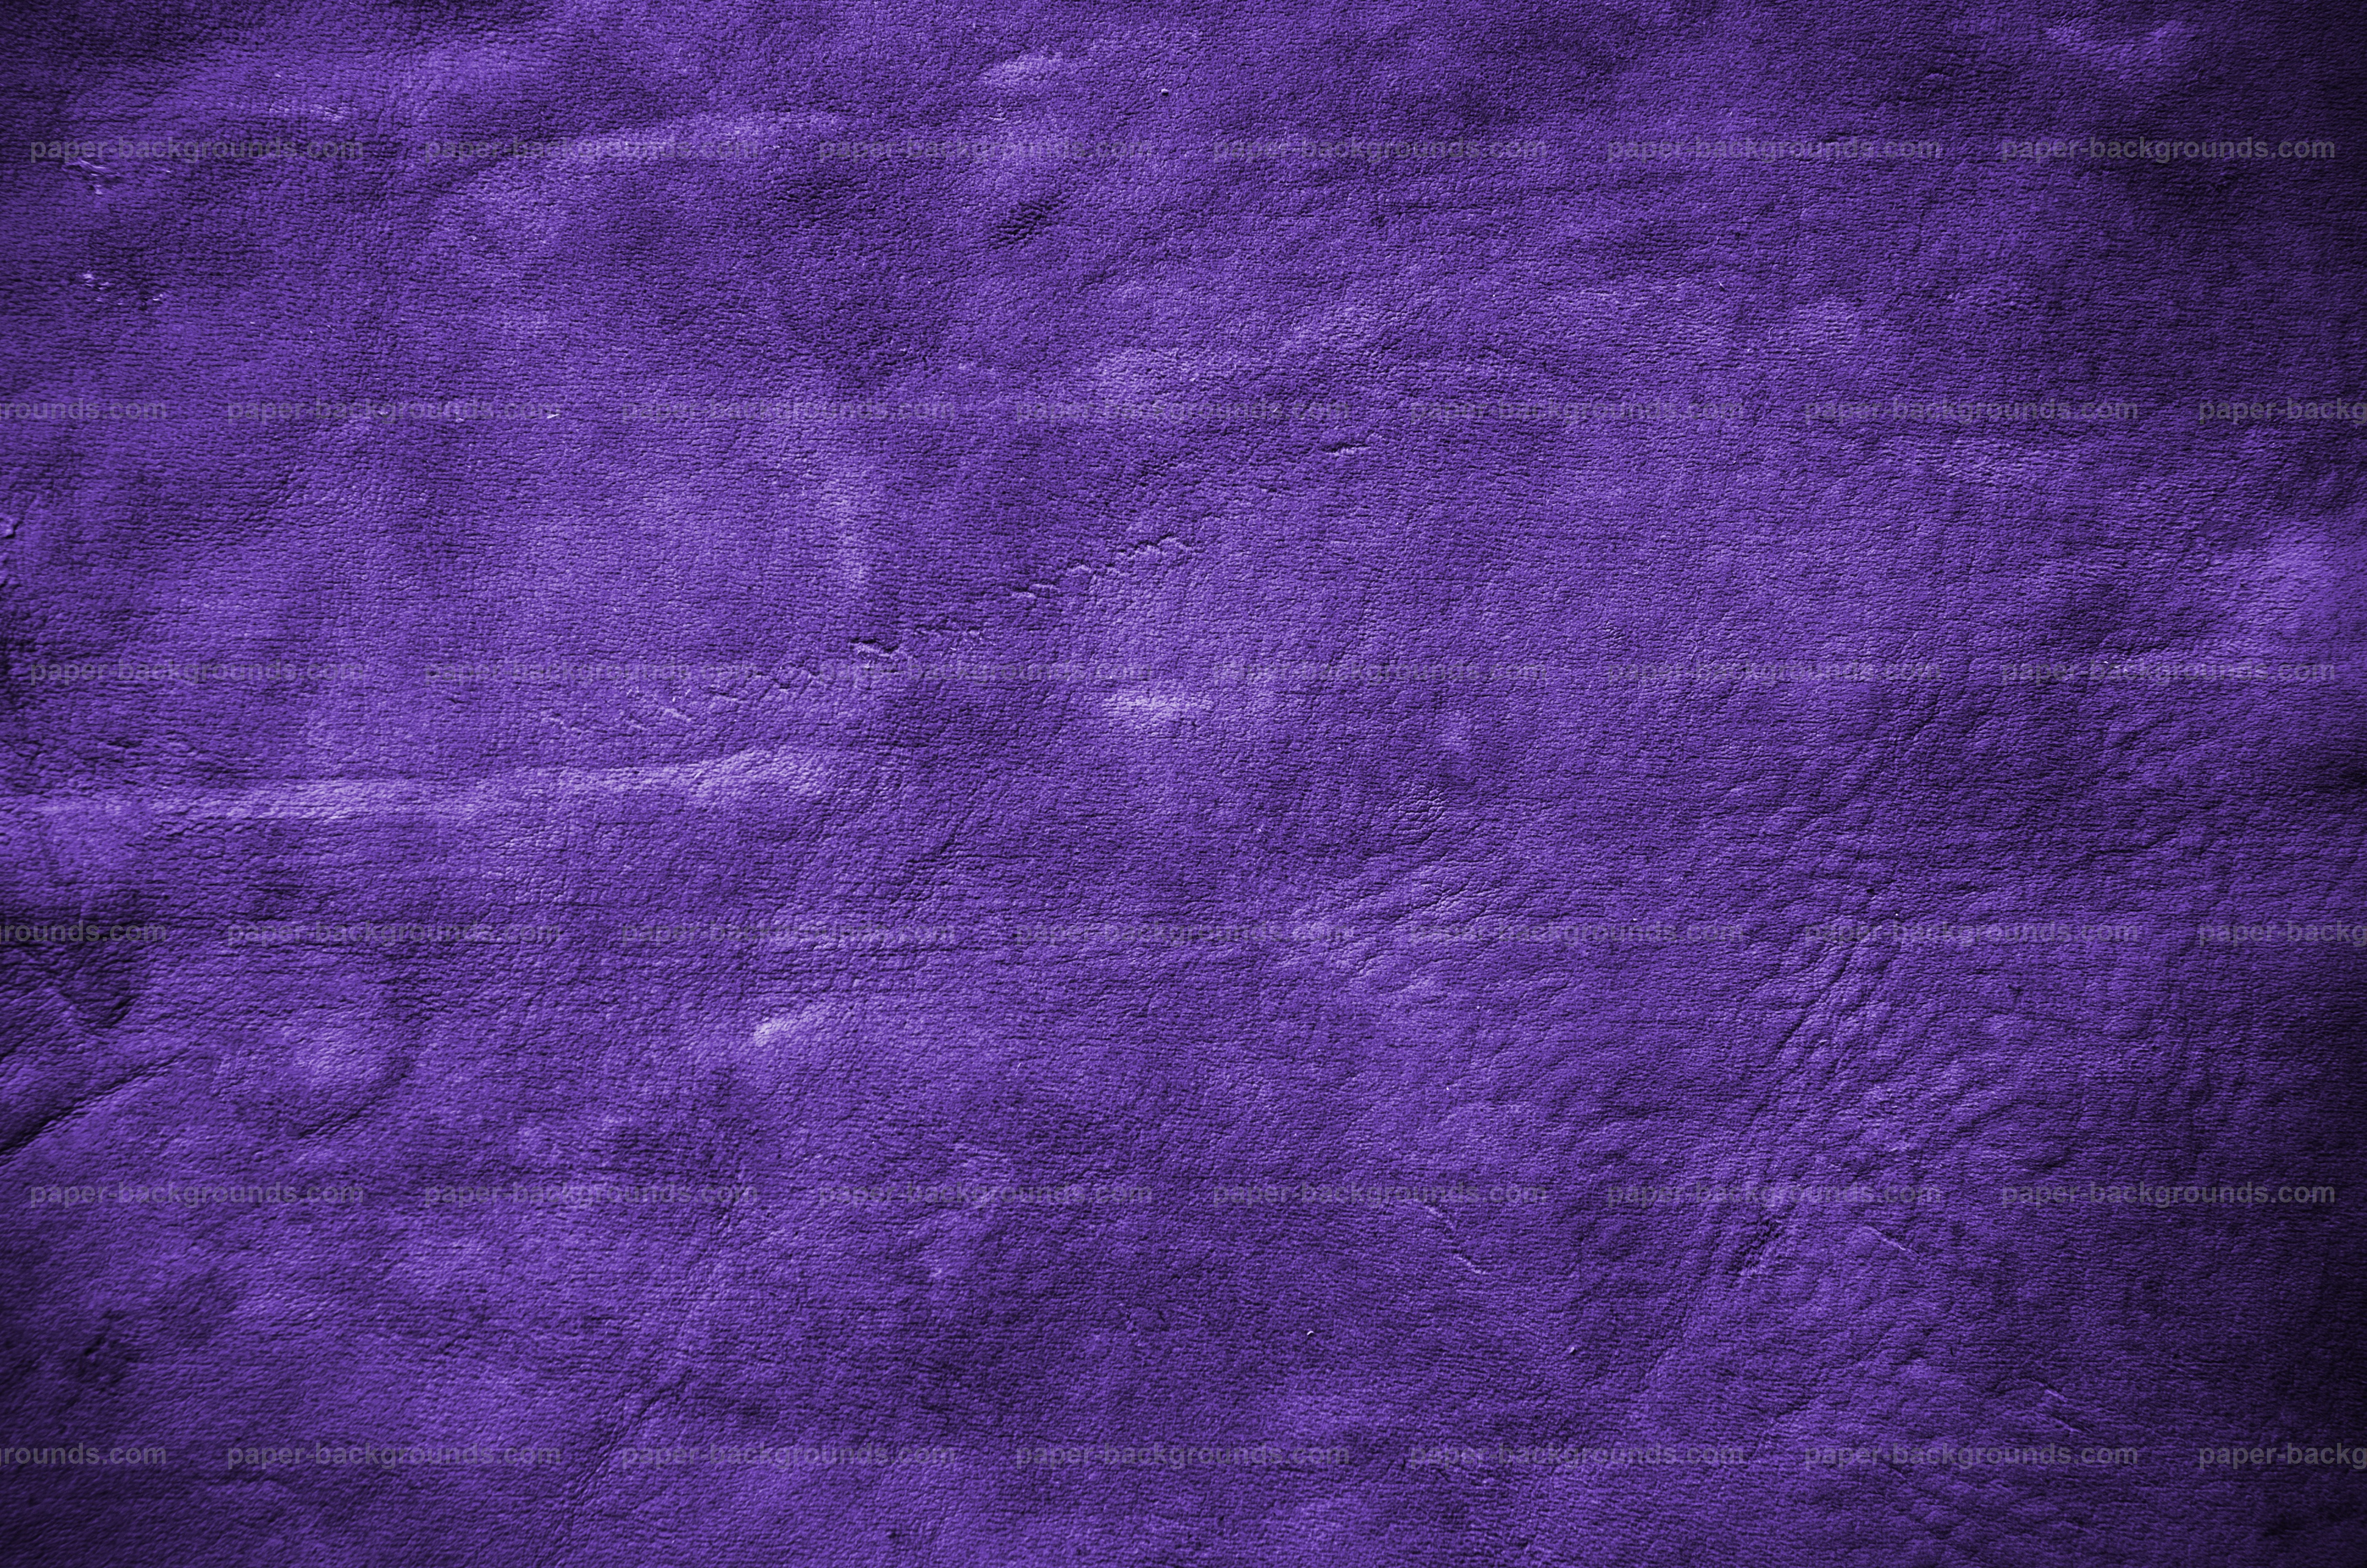 Paper Background Vintage Purple Soft Leather Texture Background